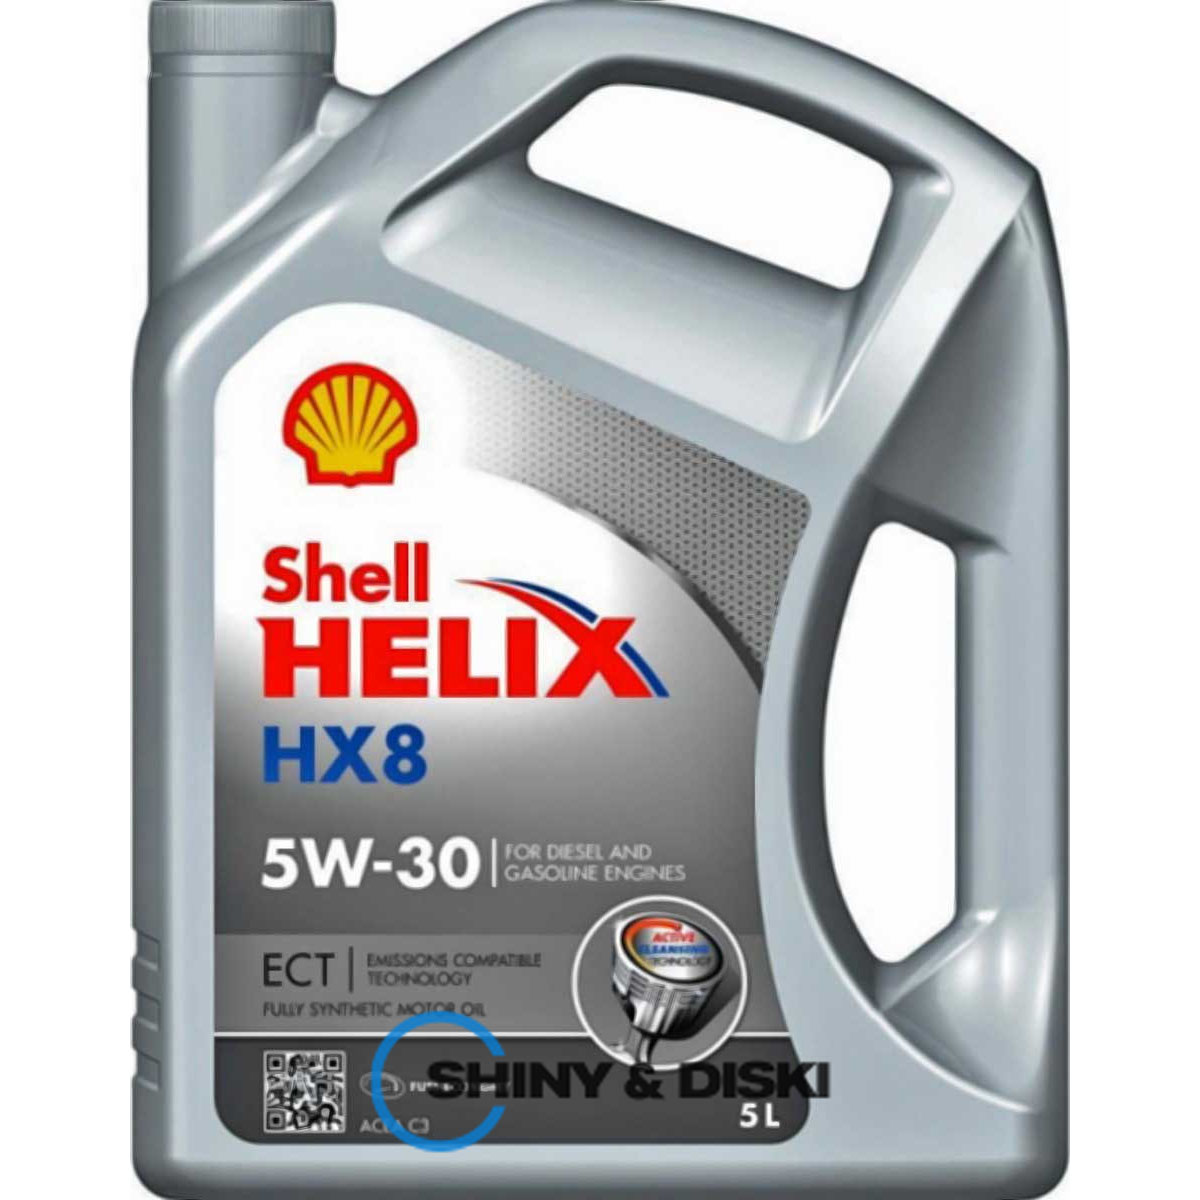 shell helix hx8 ect c3+oem